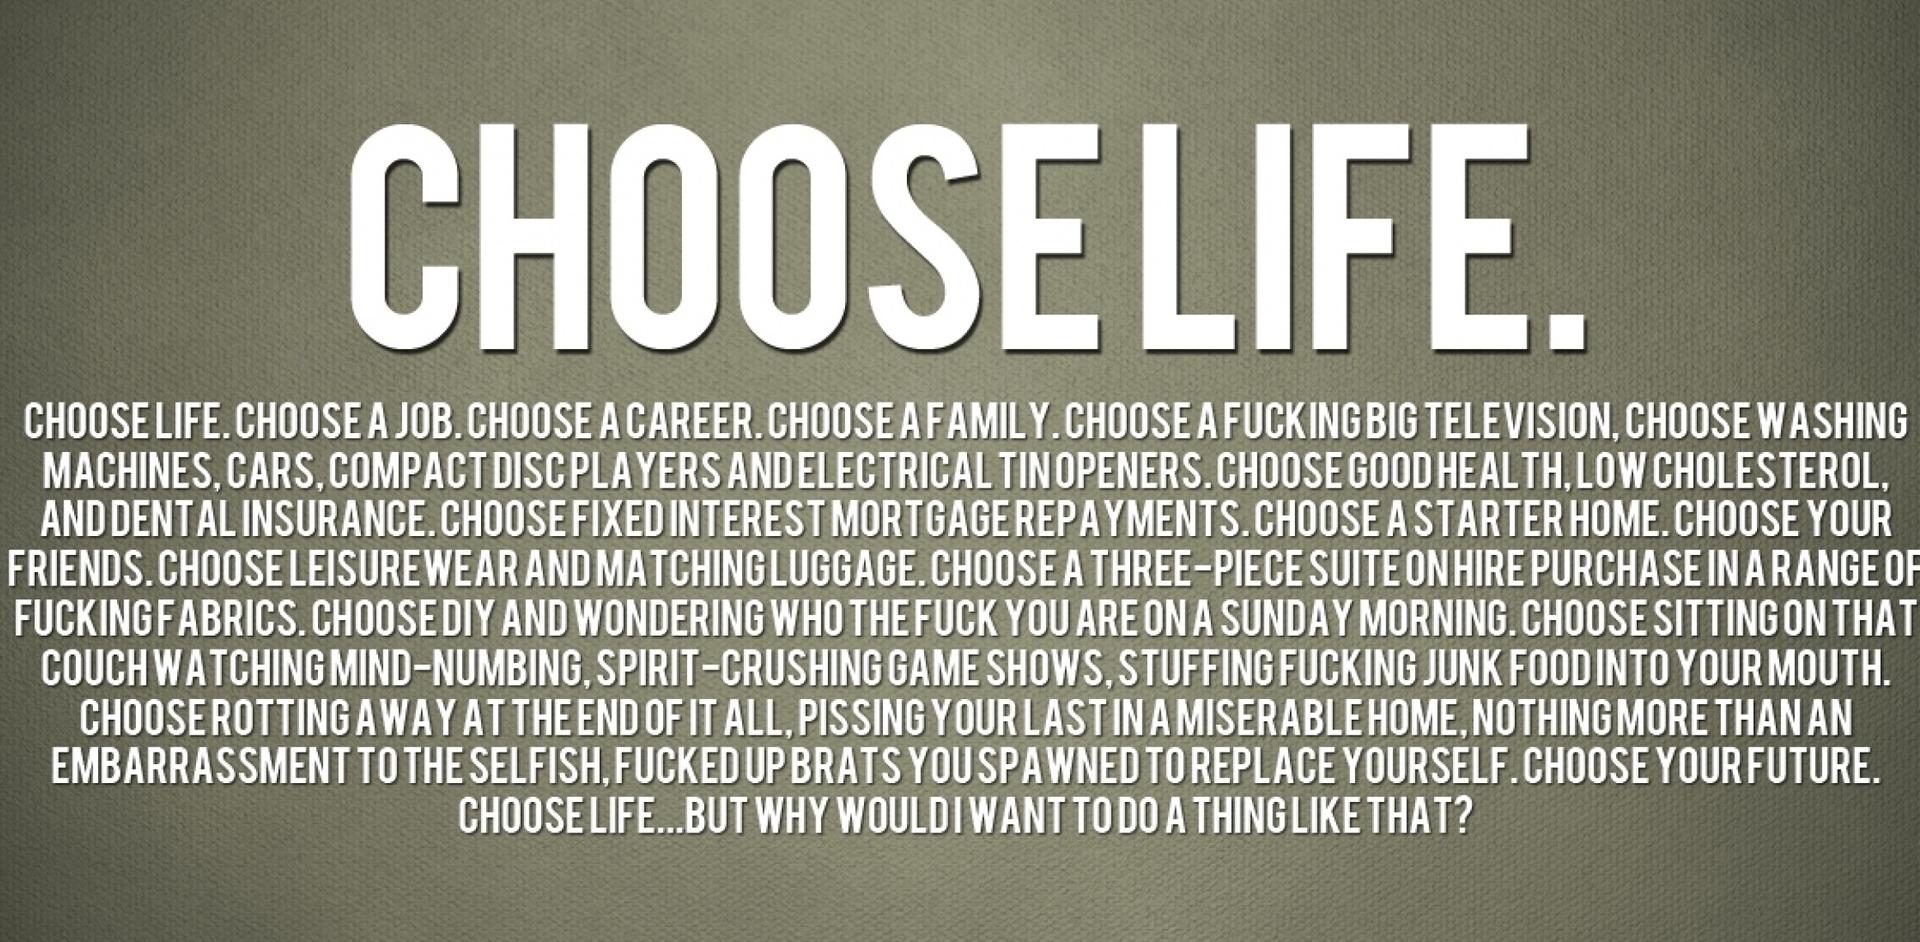 Choose life Trainspotting